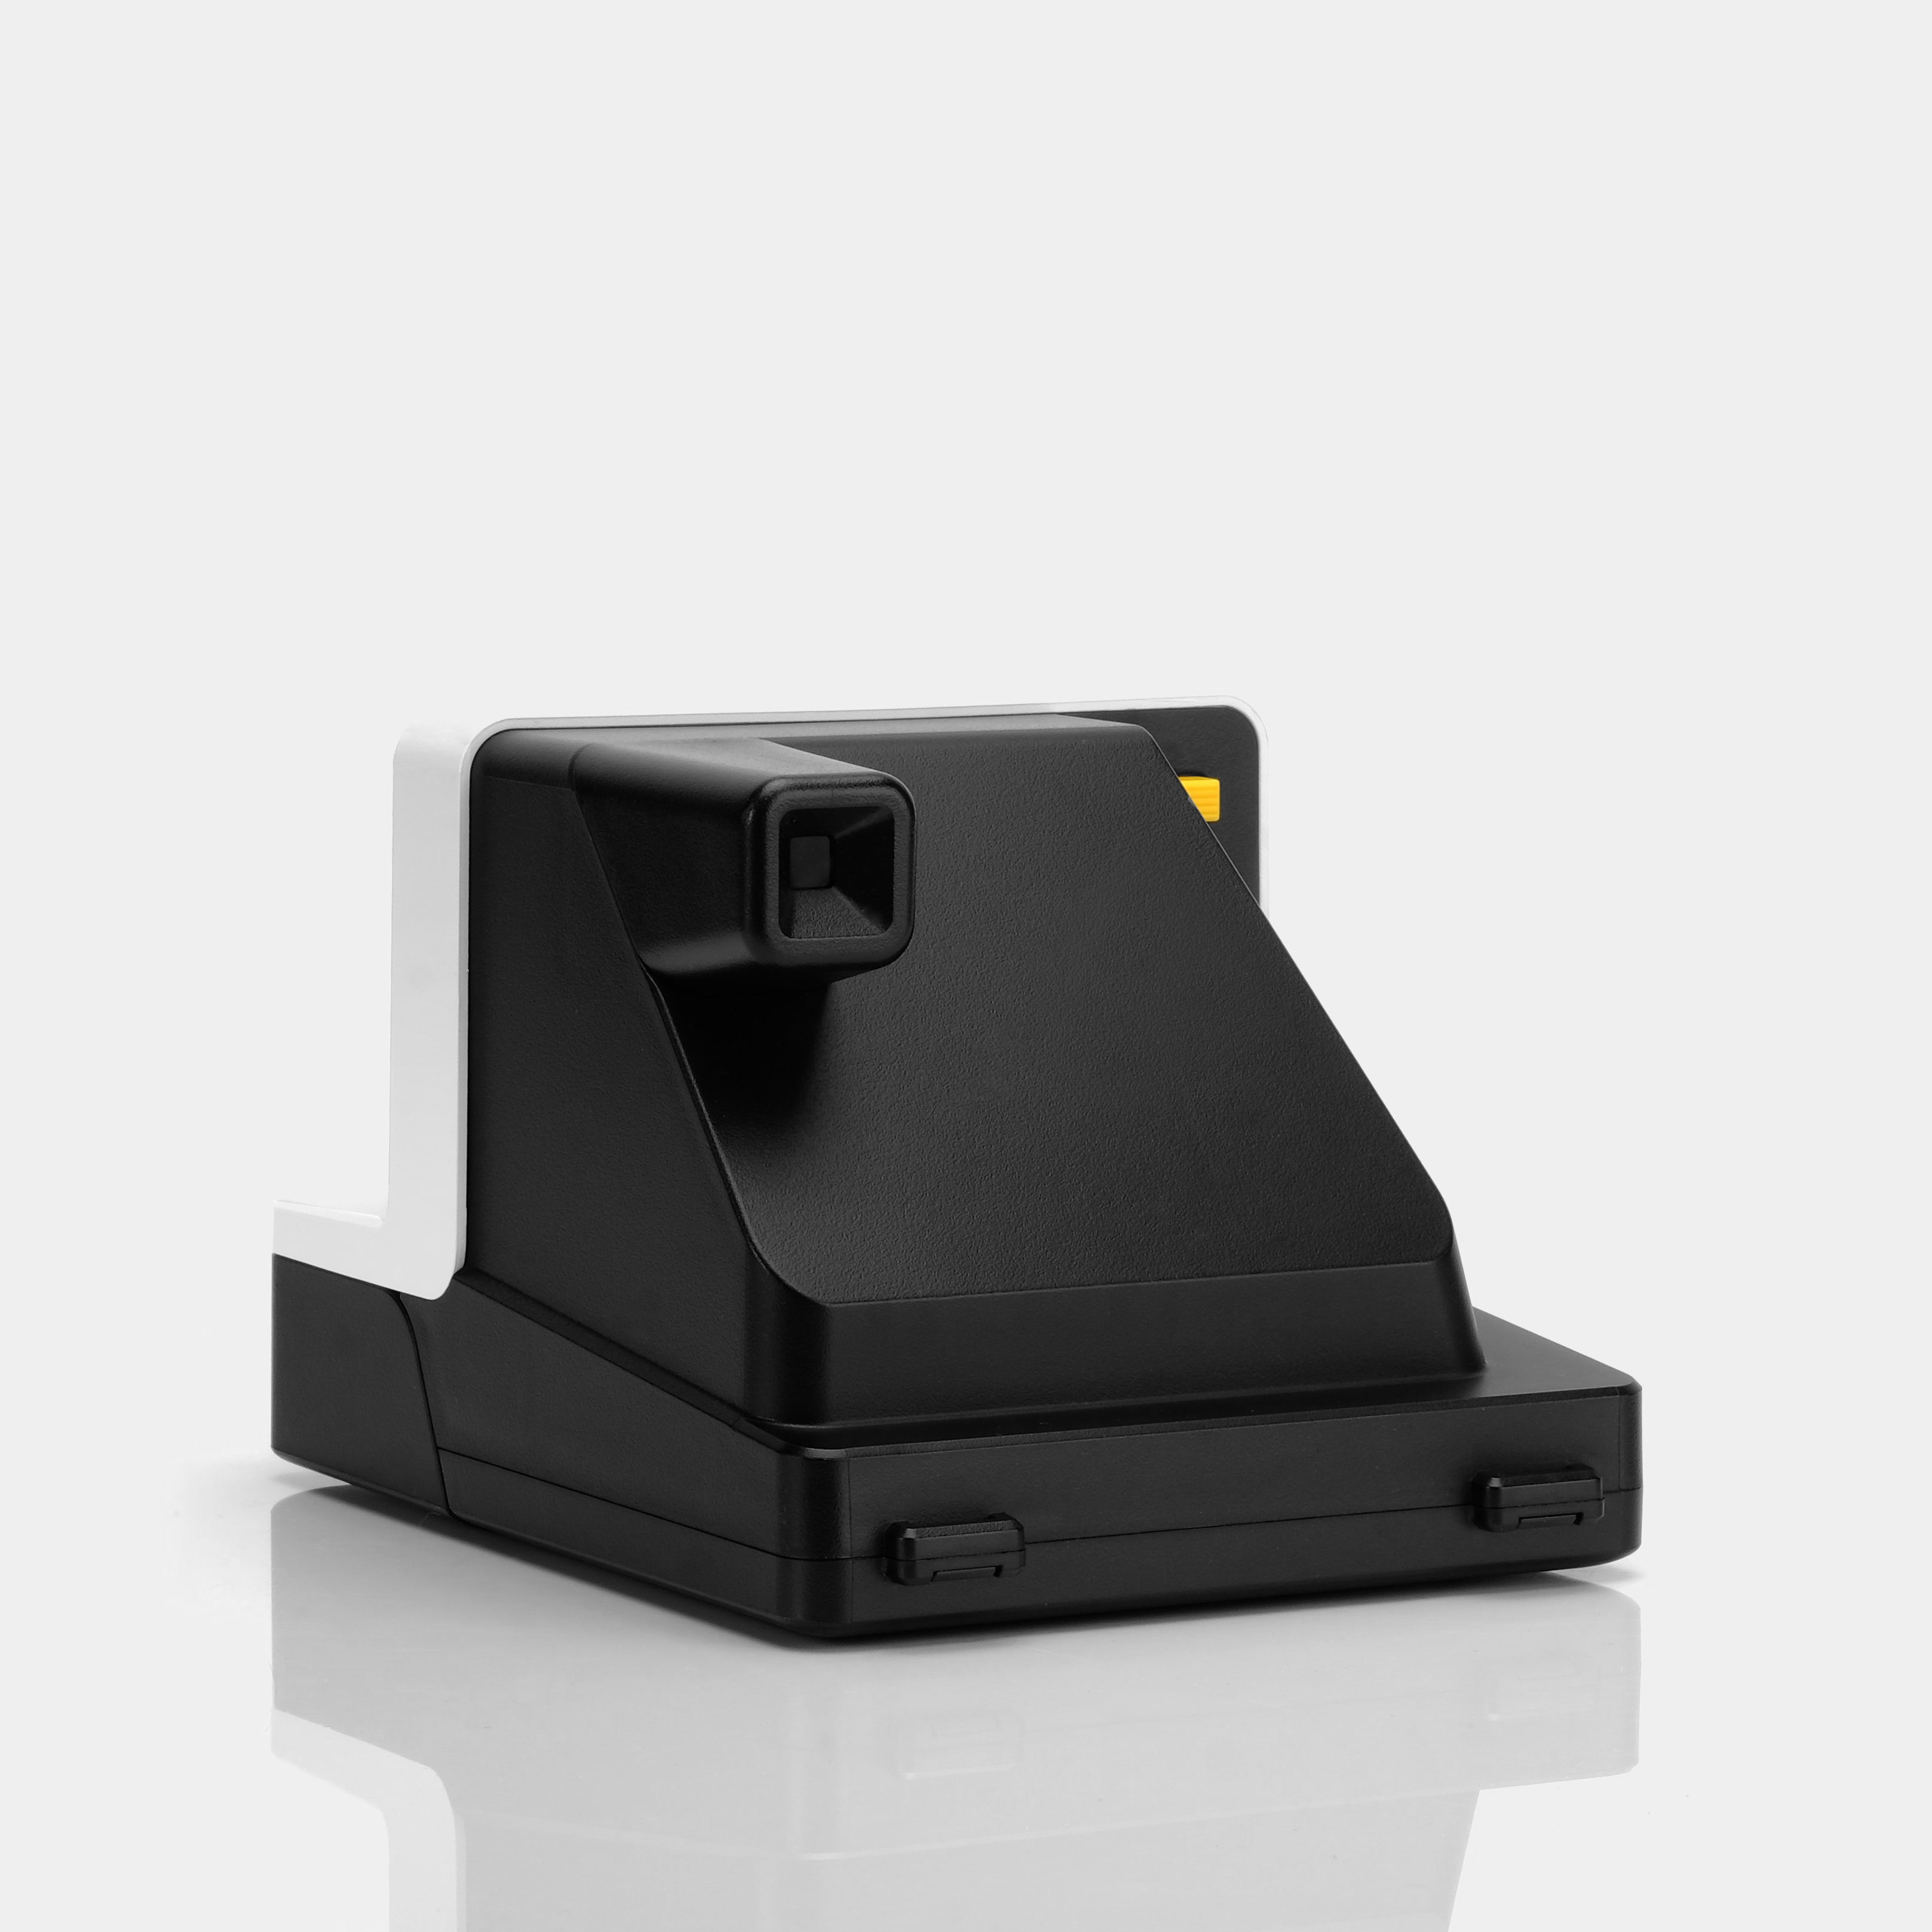 Polaroid i-Type OneStep 2 Black and White Instant Film Camera